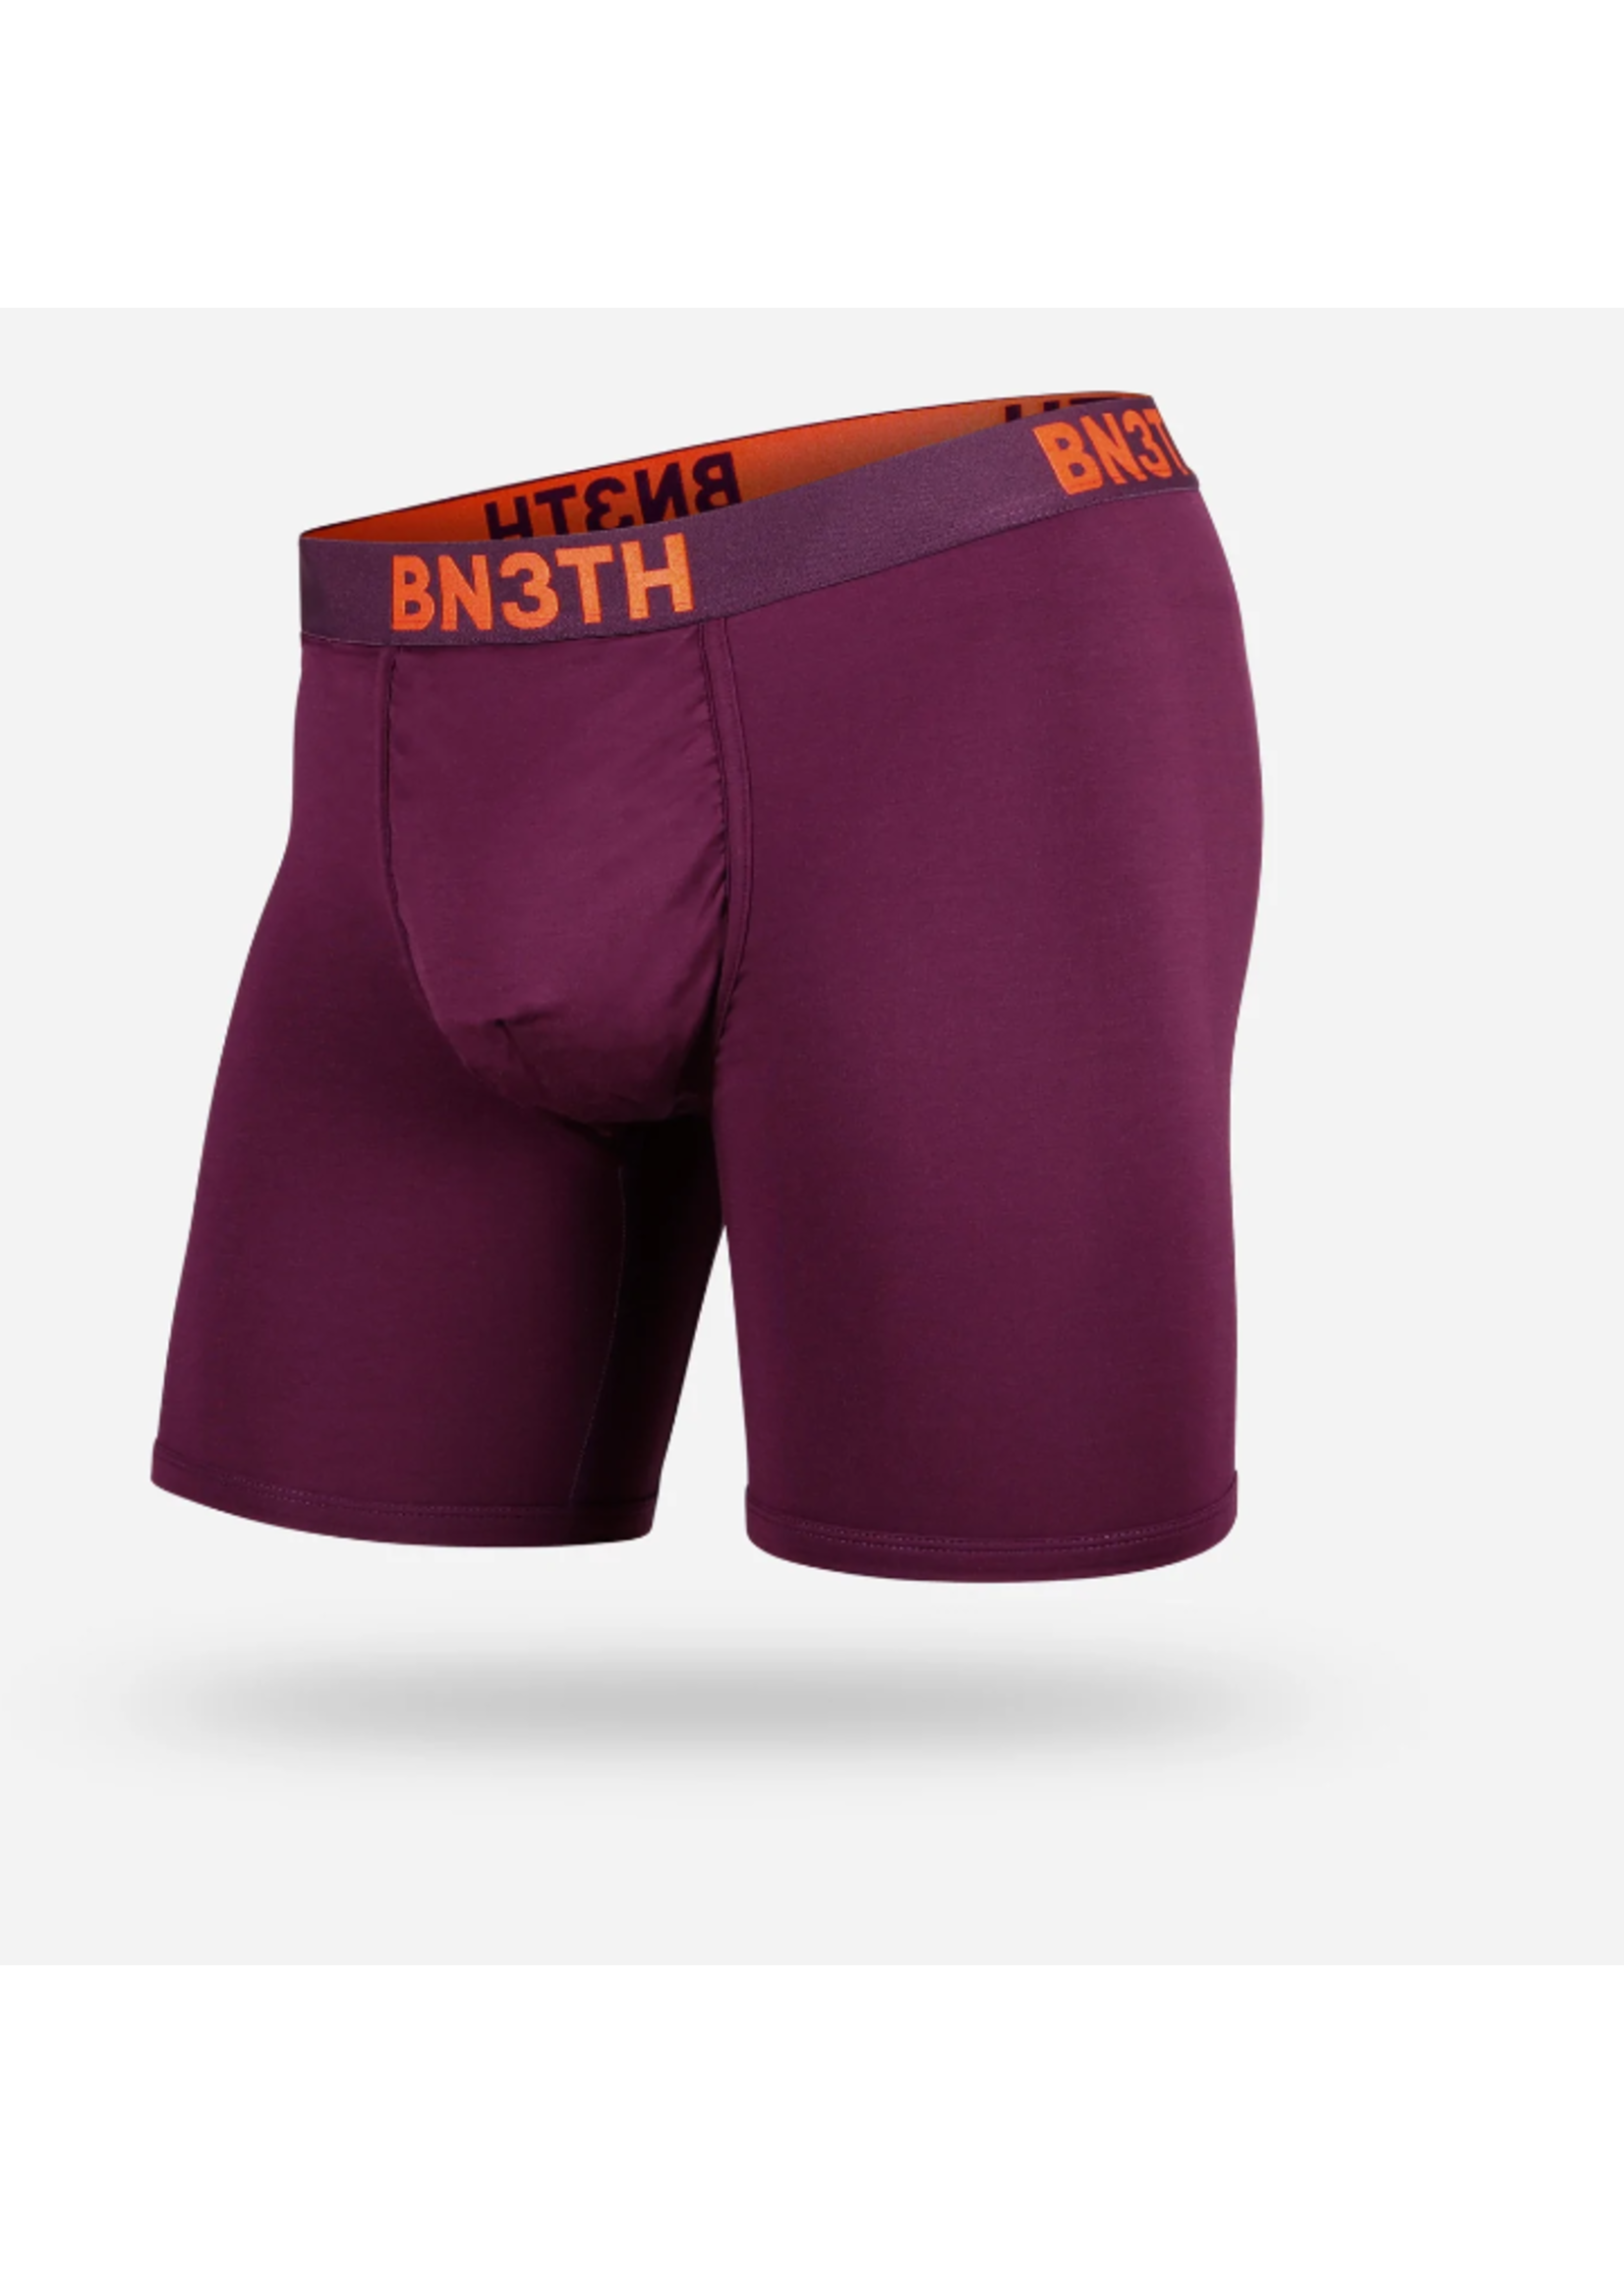 Classic Boxer Brief: Fog  BN3TH Underwear –